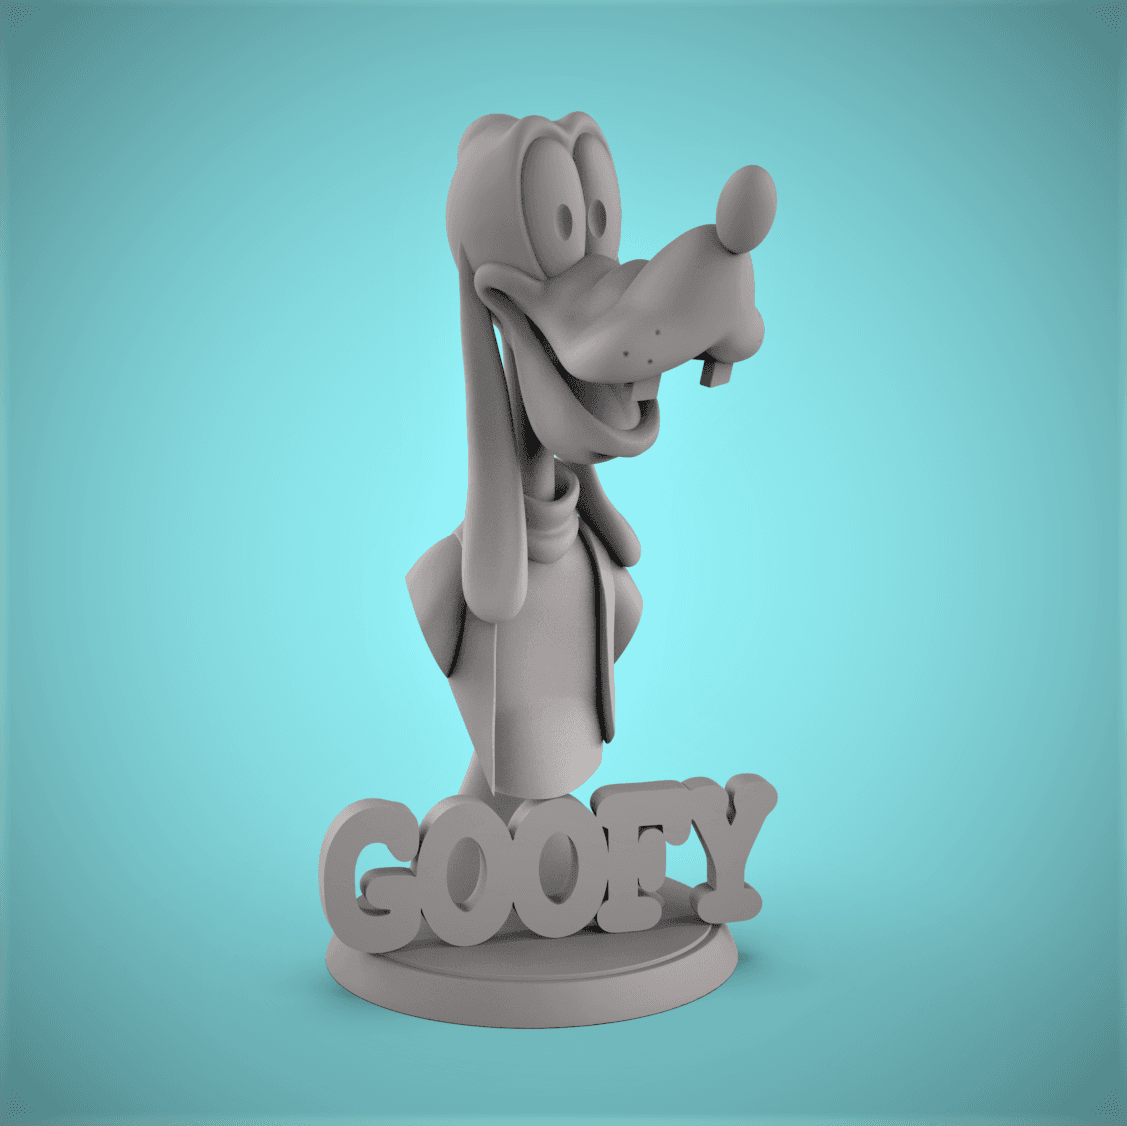 Goofy Bust 3d model